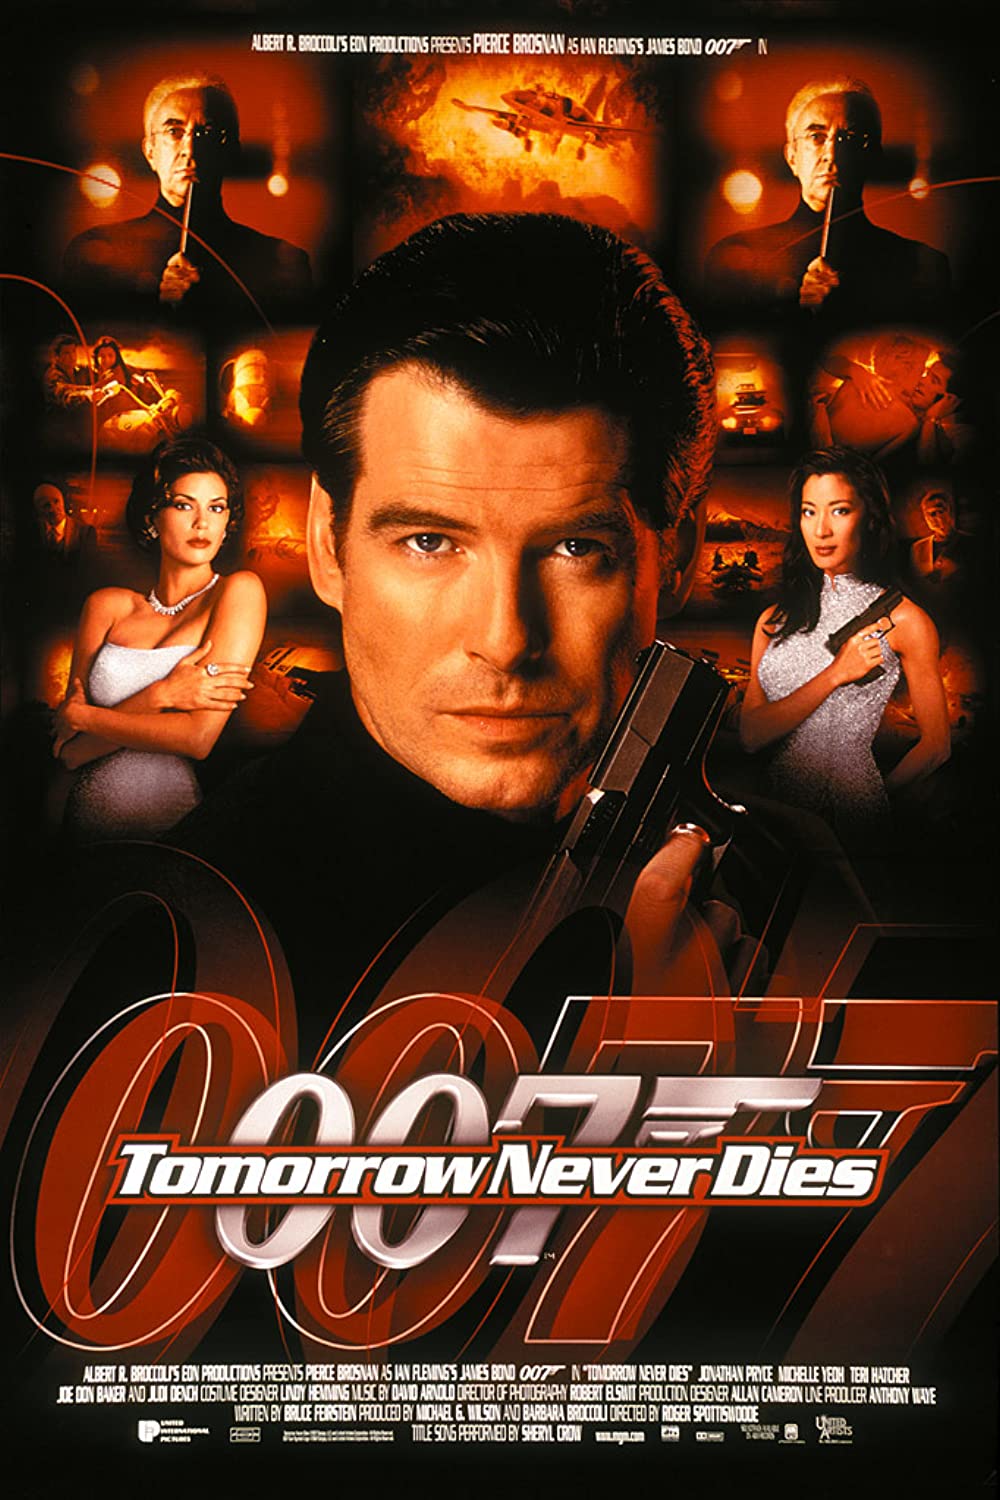 Pierce Brosnan's James Bond Movie Tomorrow never Dies, 1997